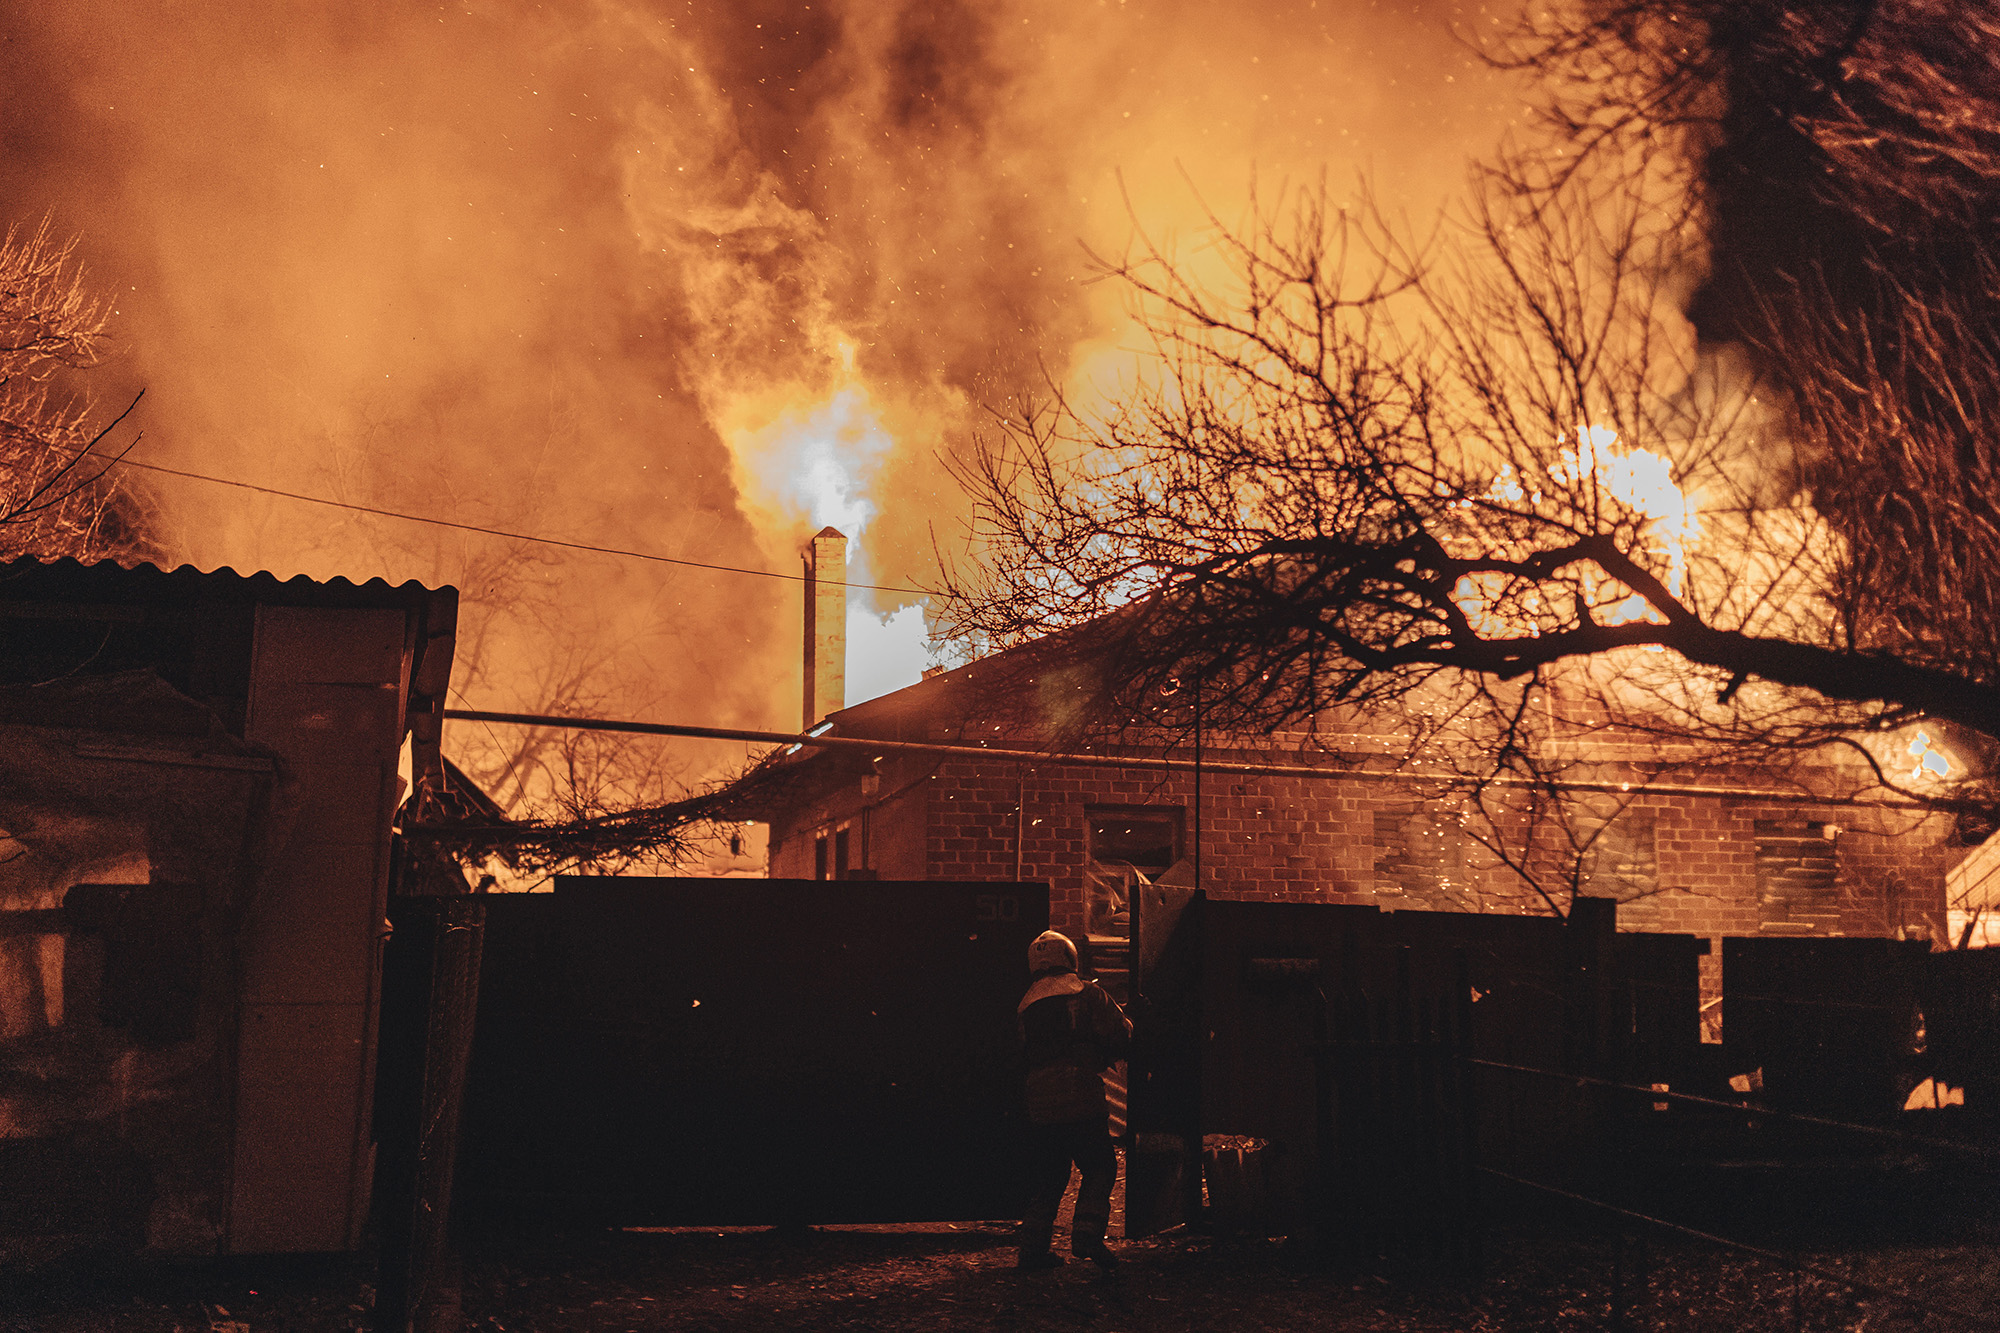 Emergency service workers extinguish a fire after shelling on the Bakhmut frontline in Ivanivske, Ukraine on January 2.